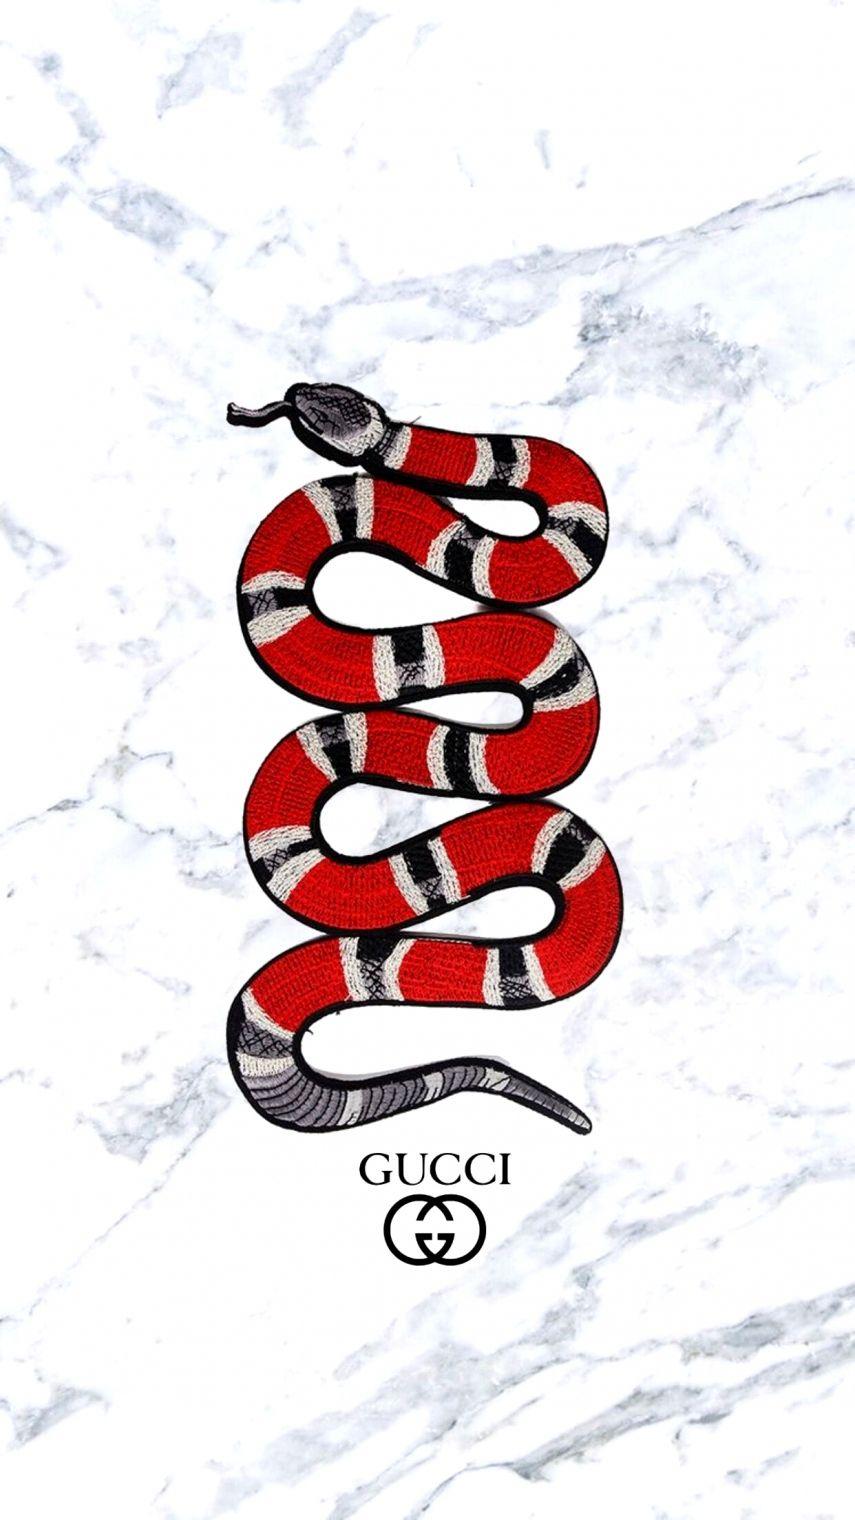 Gucci Snake Wallpaper Free Gucci Snake Background